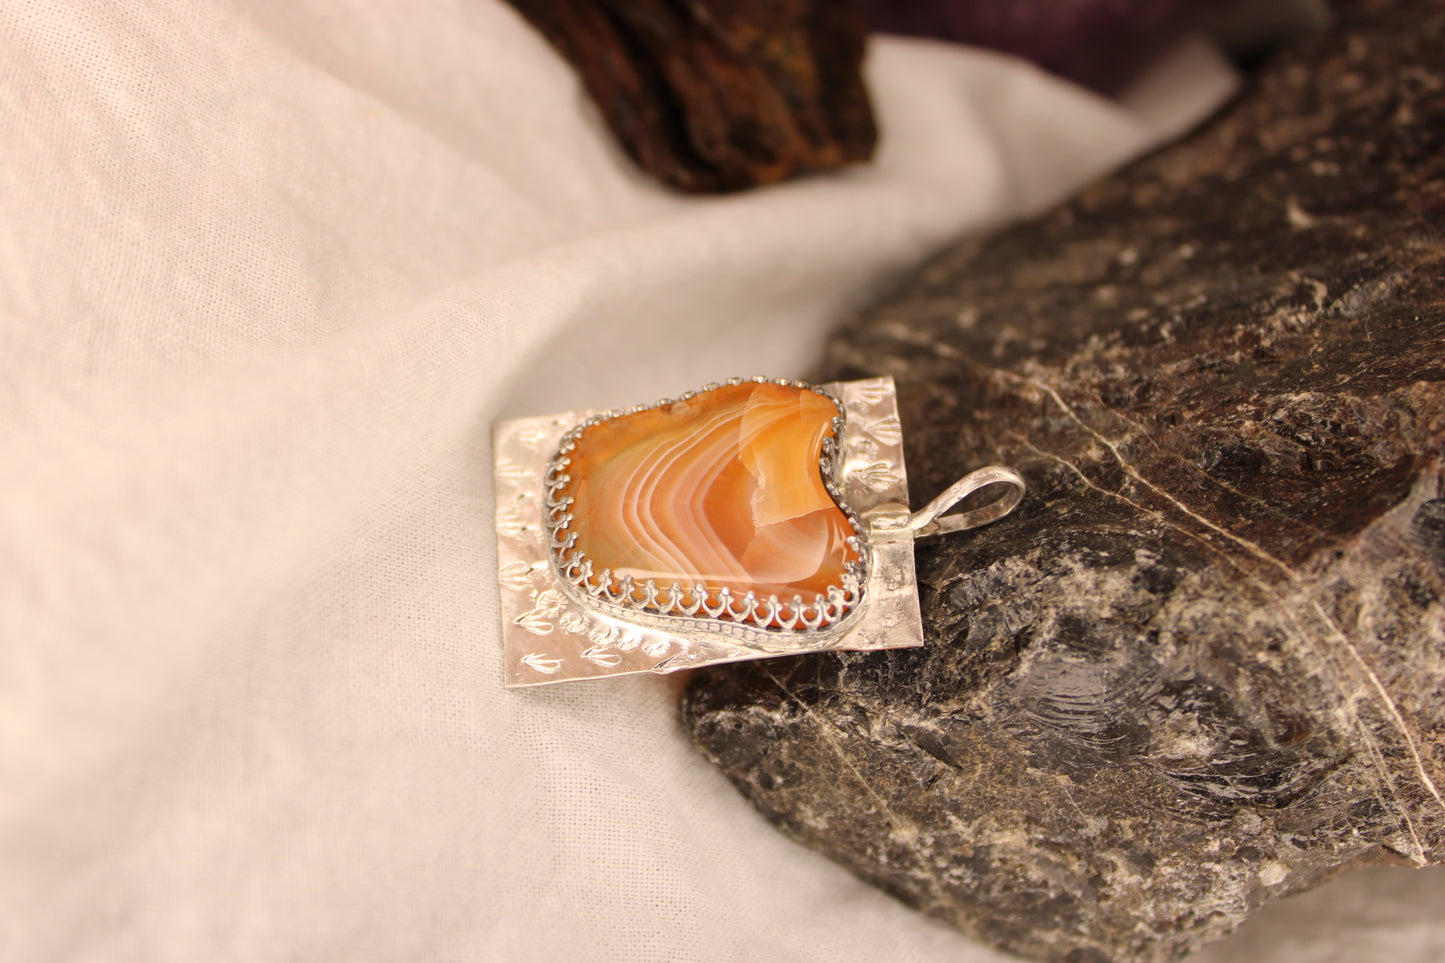 Unusual Distinct Sterling Silver Pendant Jewelry with Orange Lace Agate Stone